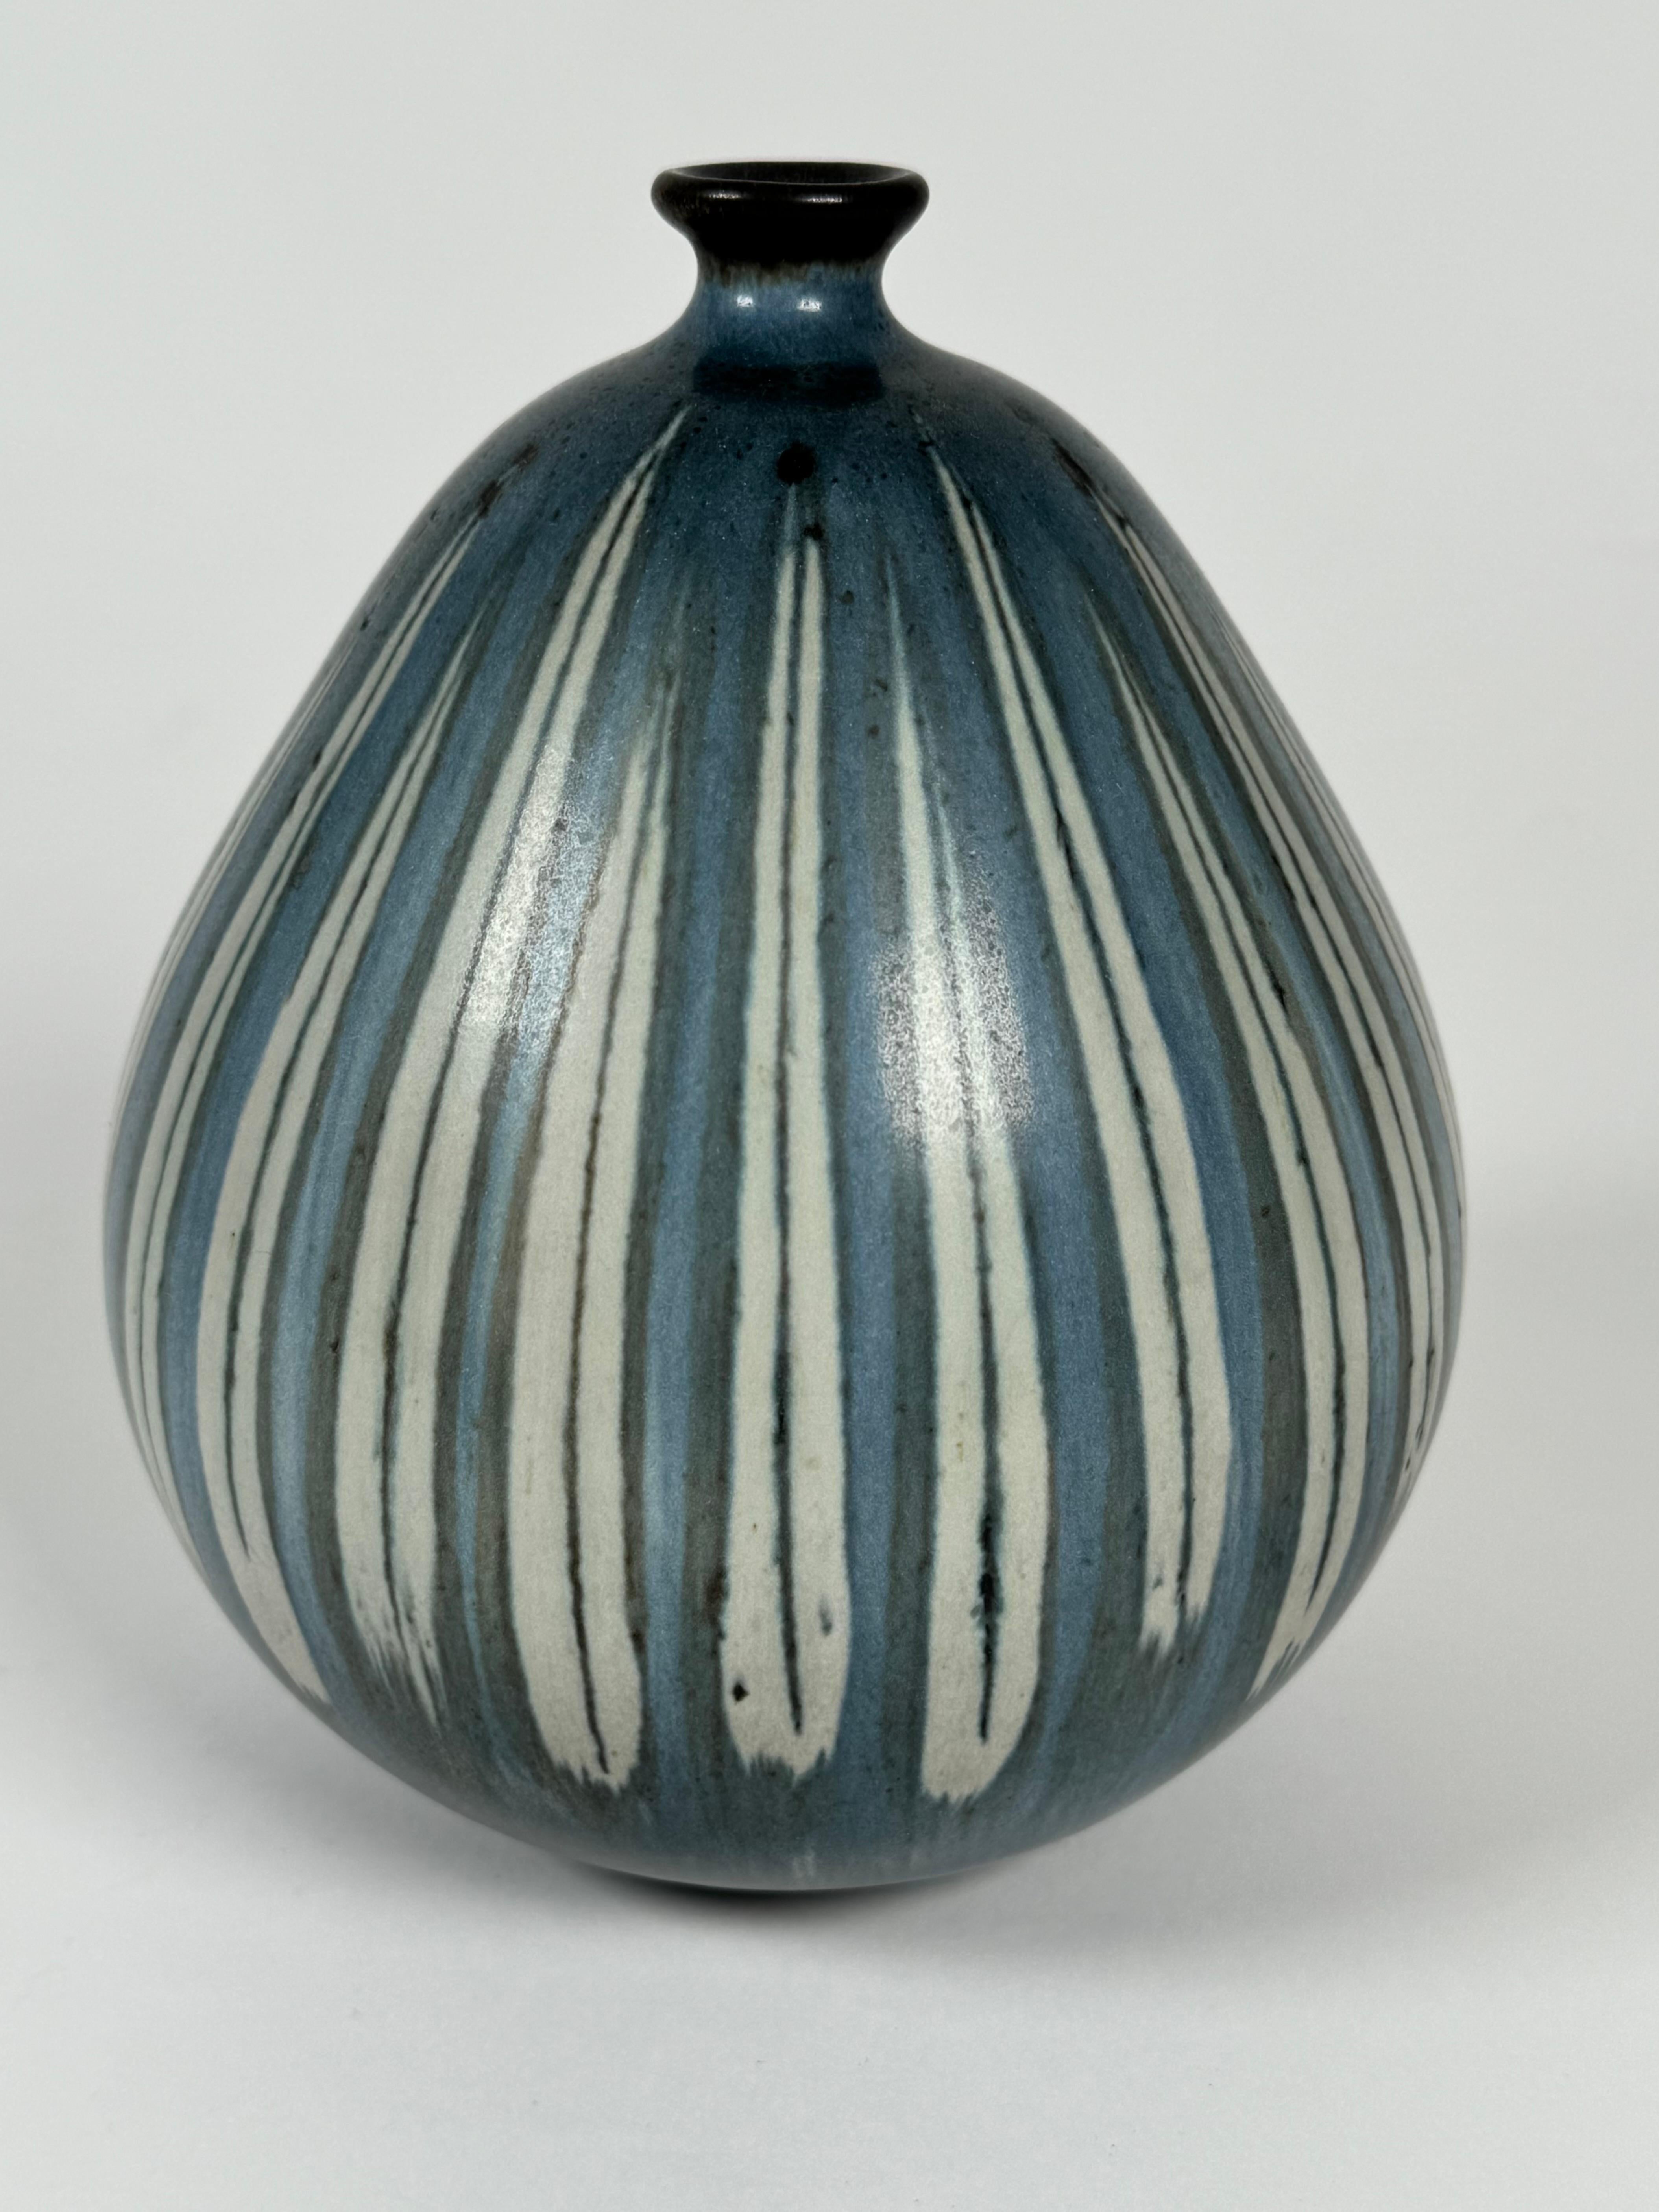 California Studio Ceramic Artist Rupert Deese Bulbous  Vase (1924-2010) In Excellent Condition For Sale In Oakland, CA